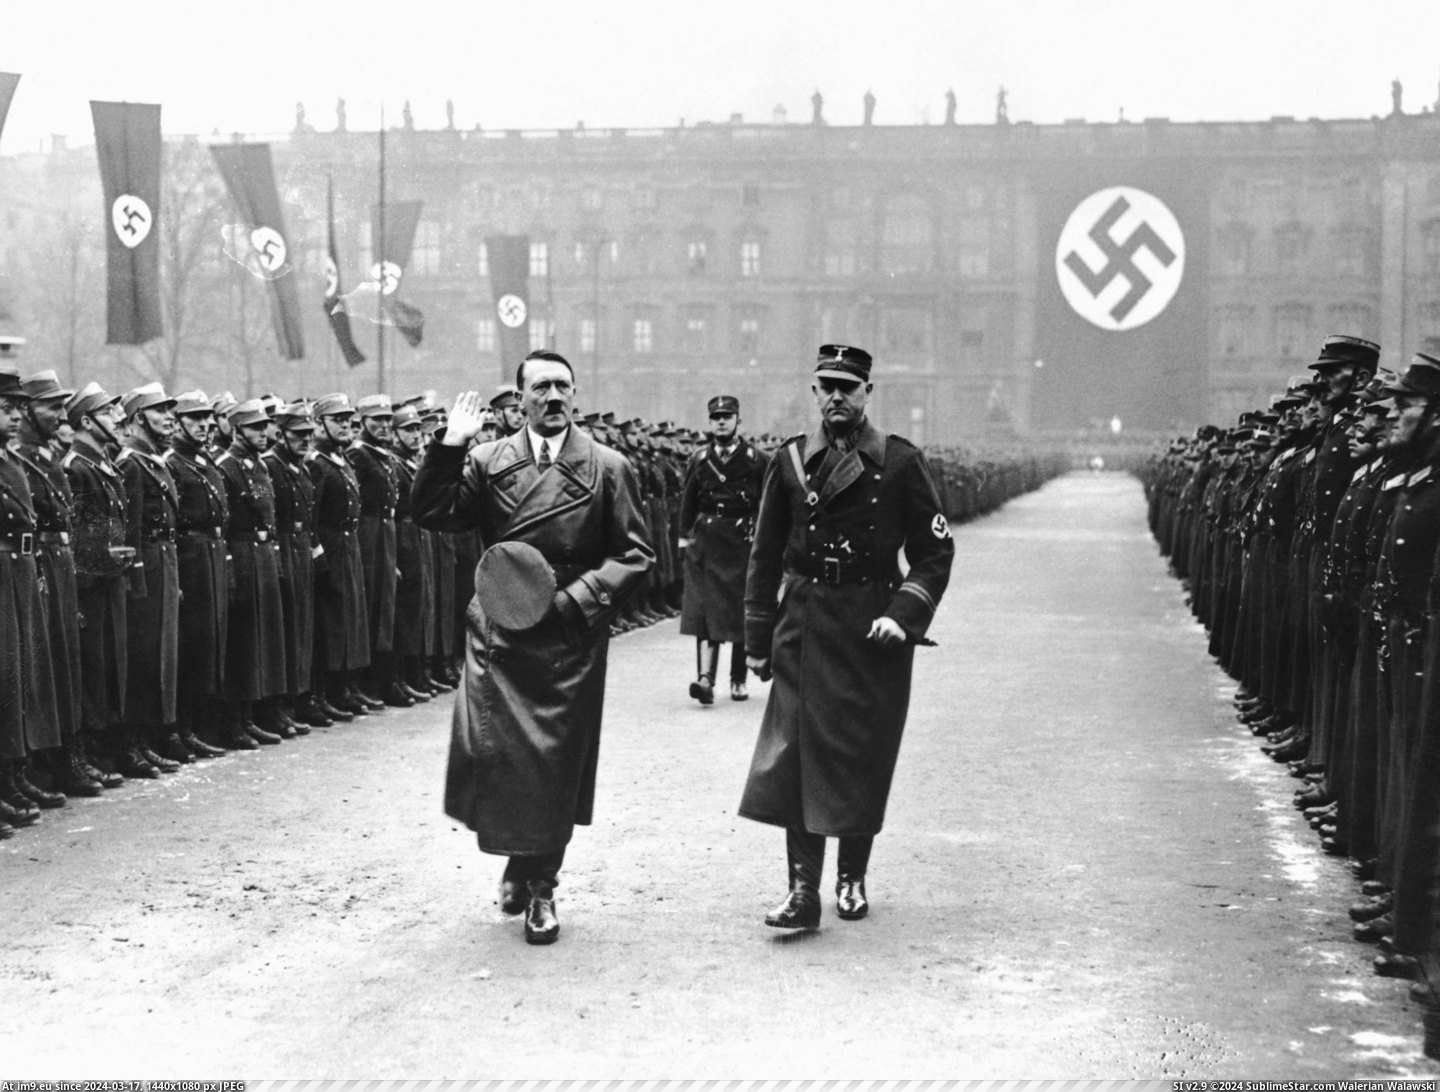 #3rd #History #Reich #Salute #German #Hitler Hitler's Salute (3rd Reich, German history) Pic. (Obraz z album Rehost))